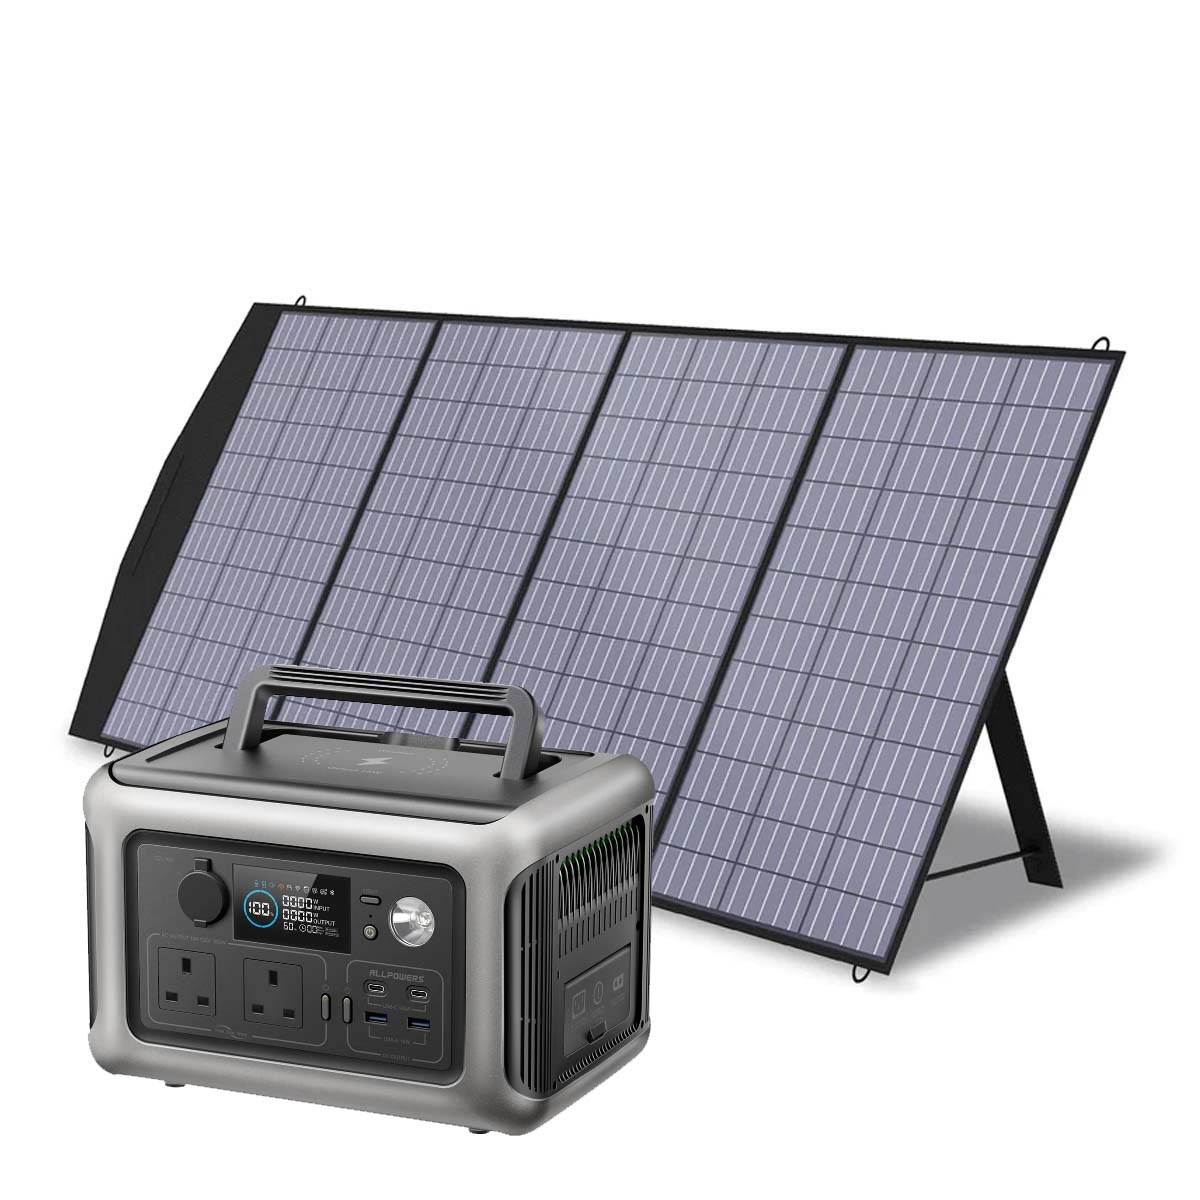 r600-black-1-sp033-solar-generator-kit-uk.jpg